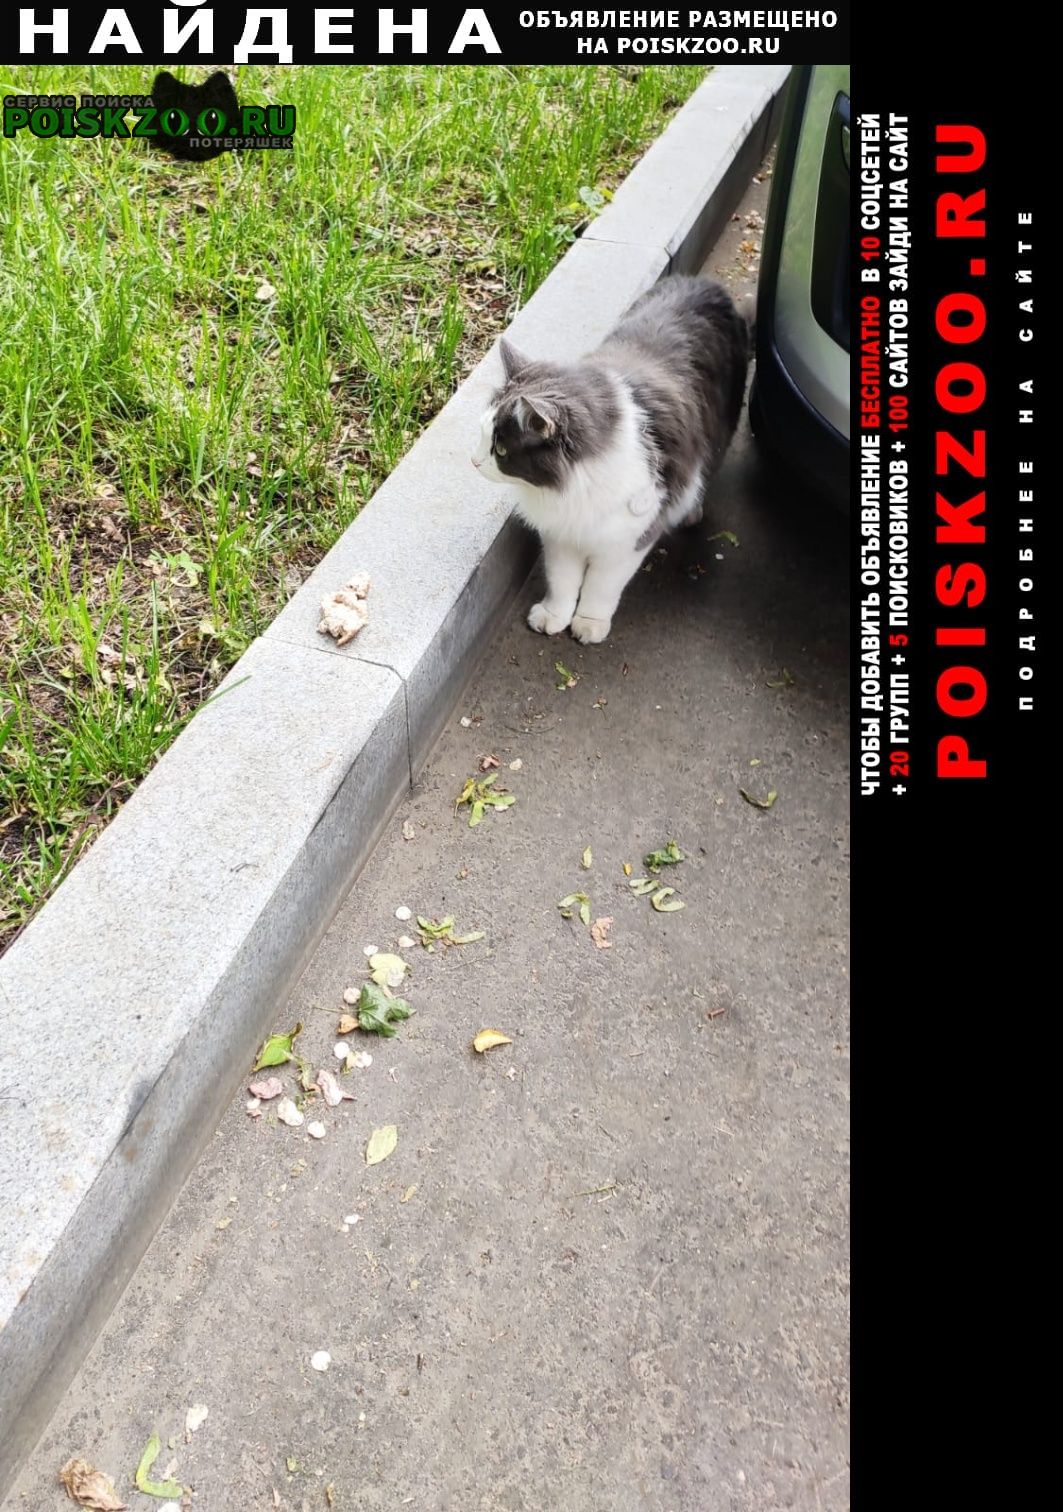 Найдена кошка видели кошку Москва